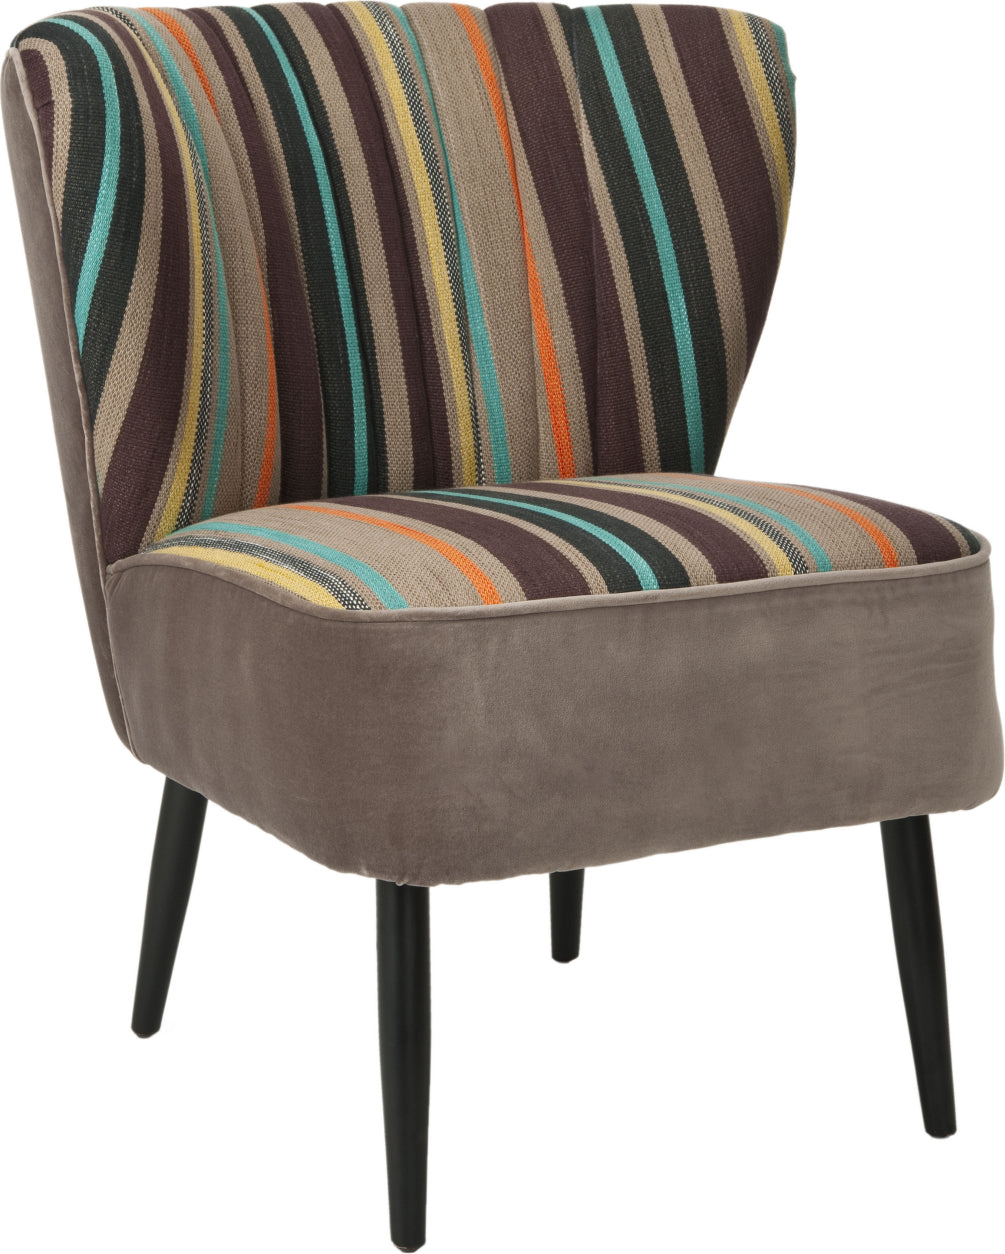 Safavieh Morgan Accent Chair Multi Striped and Black Main Feature